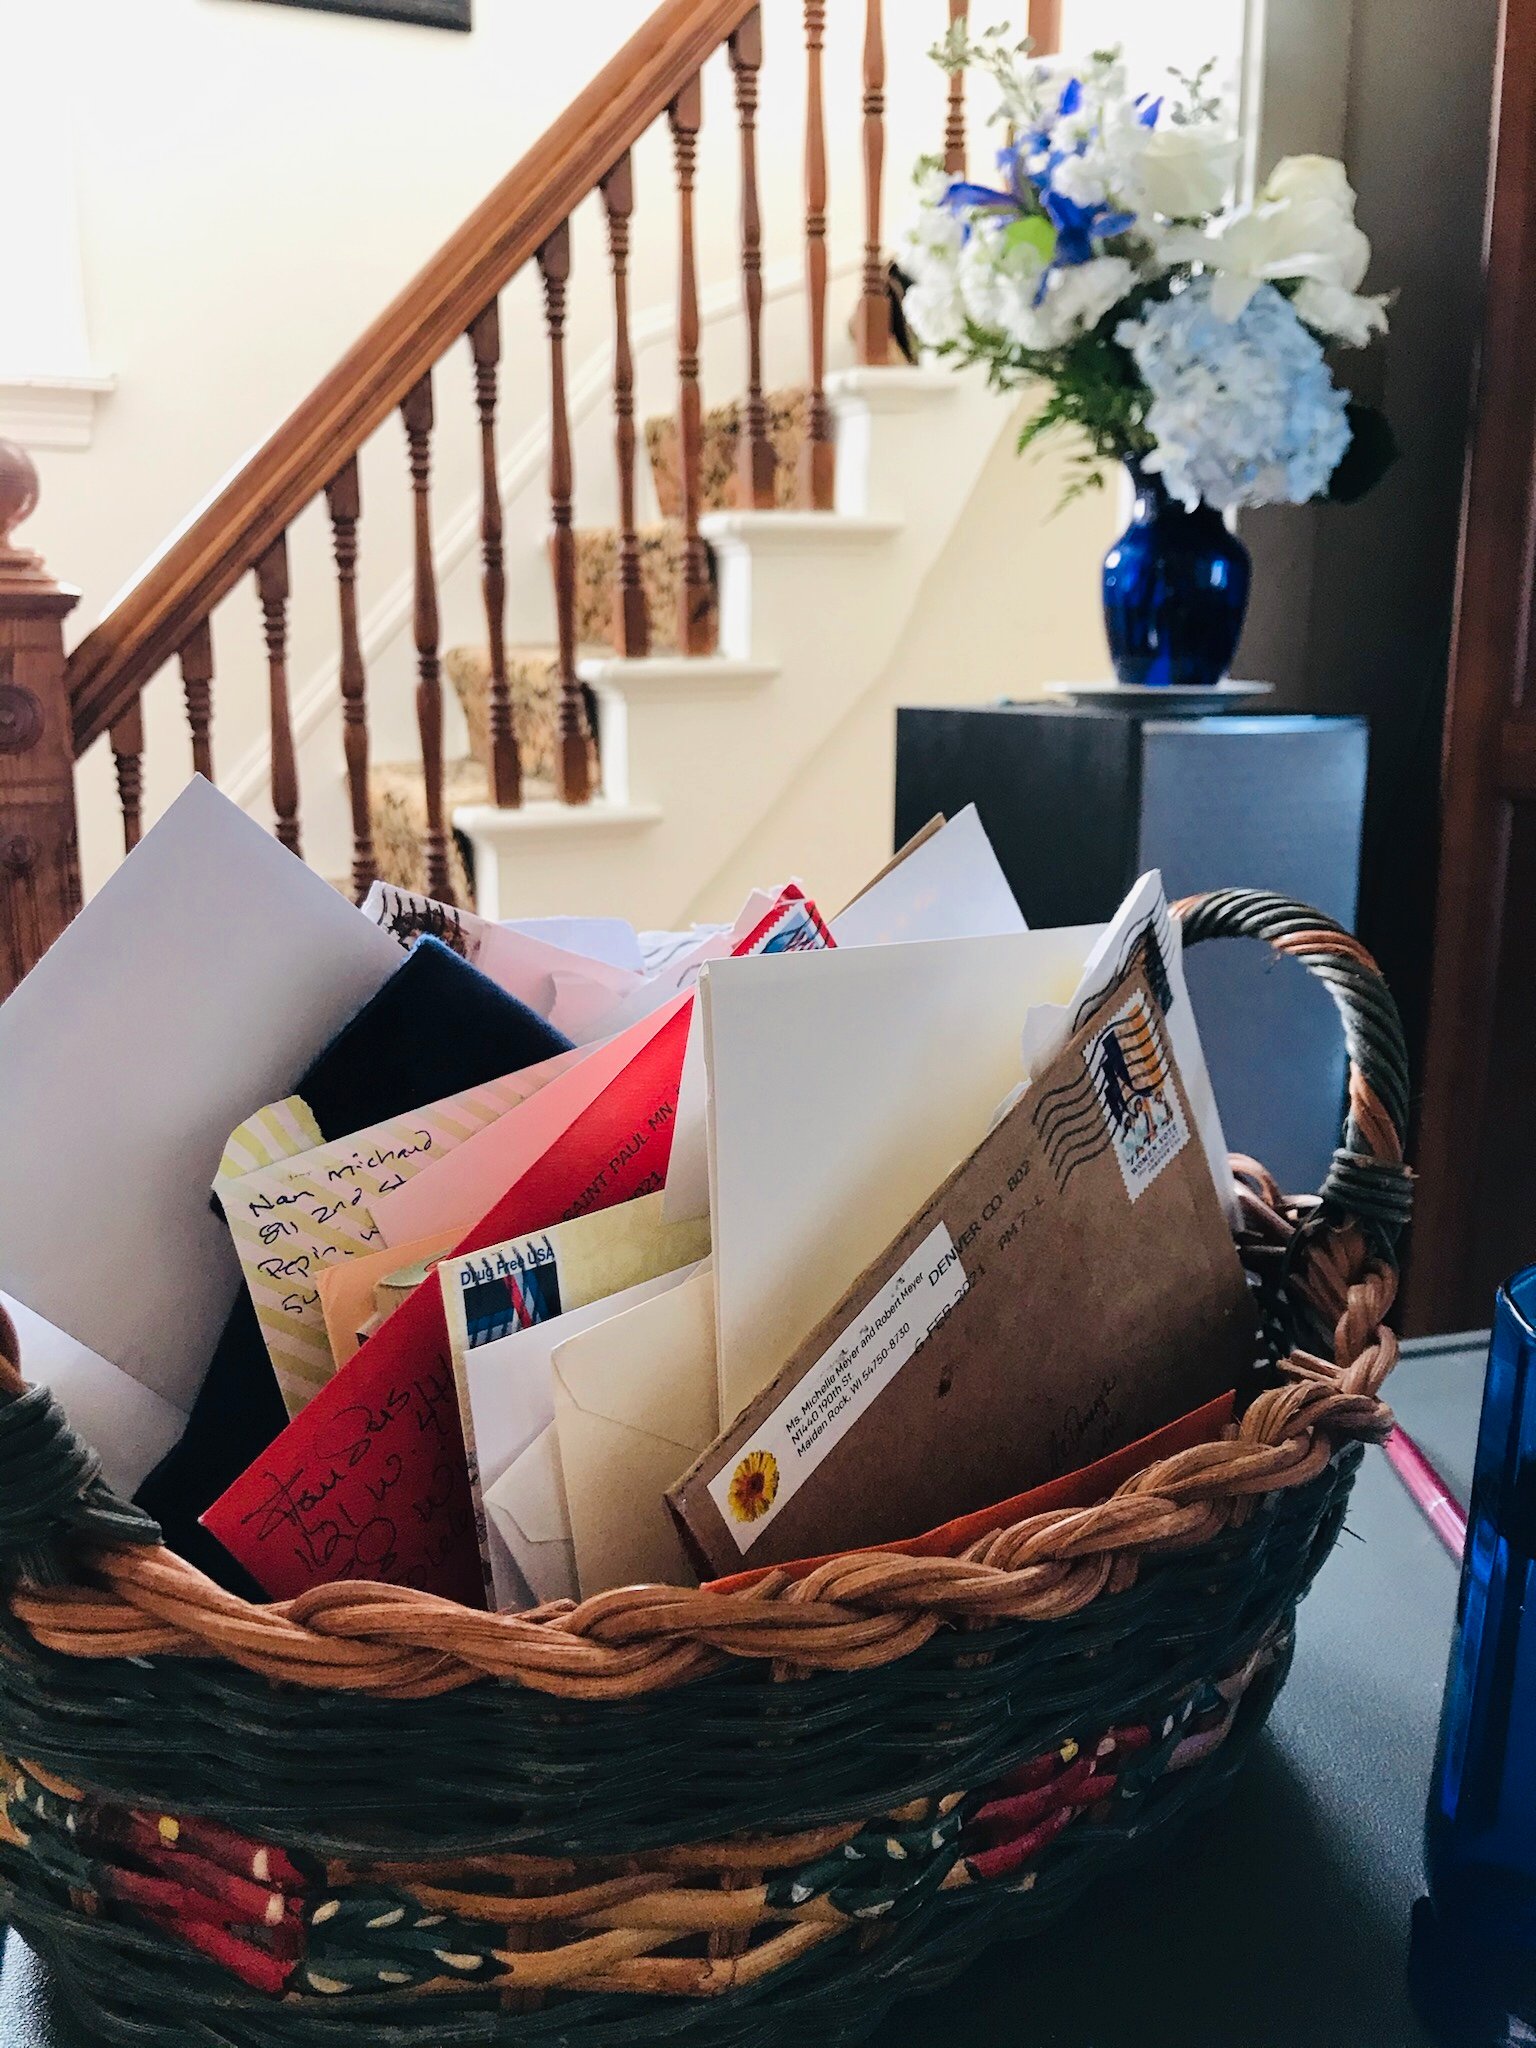  Basket of love letters